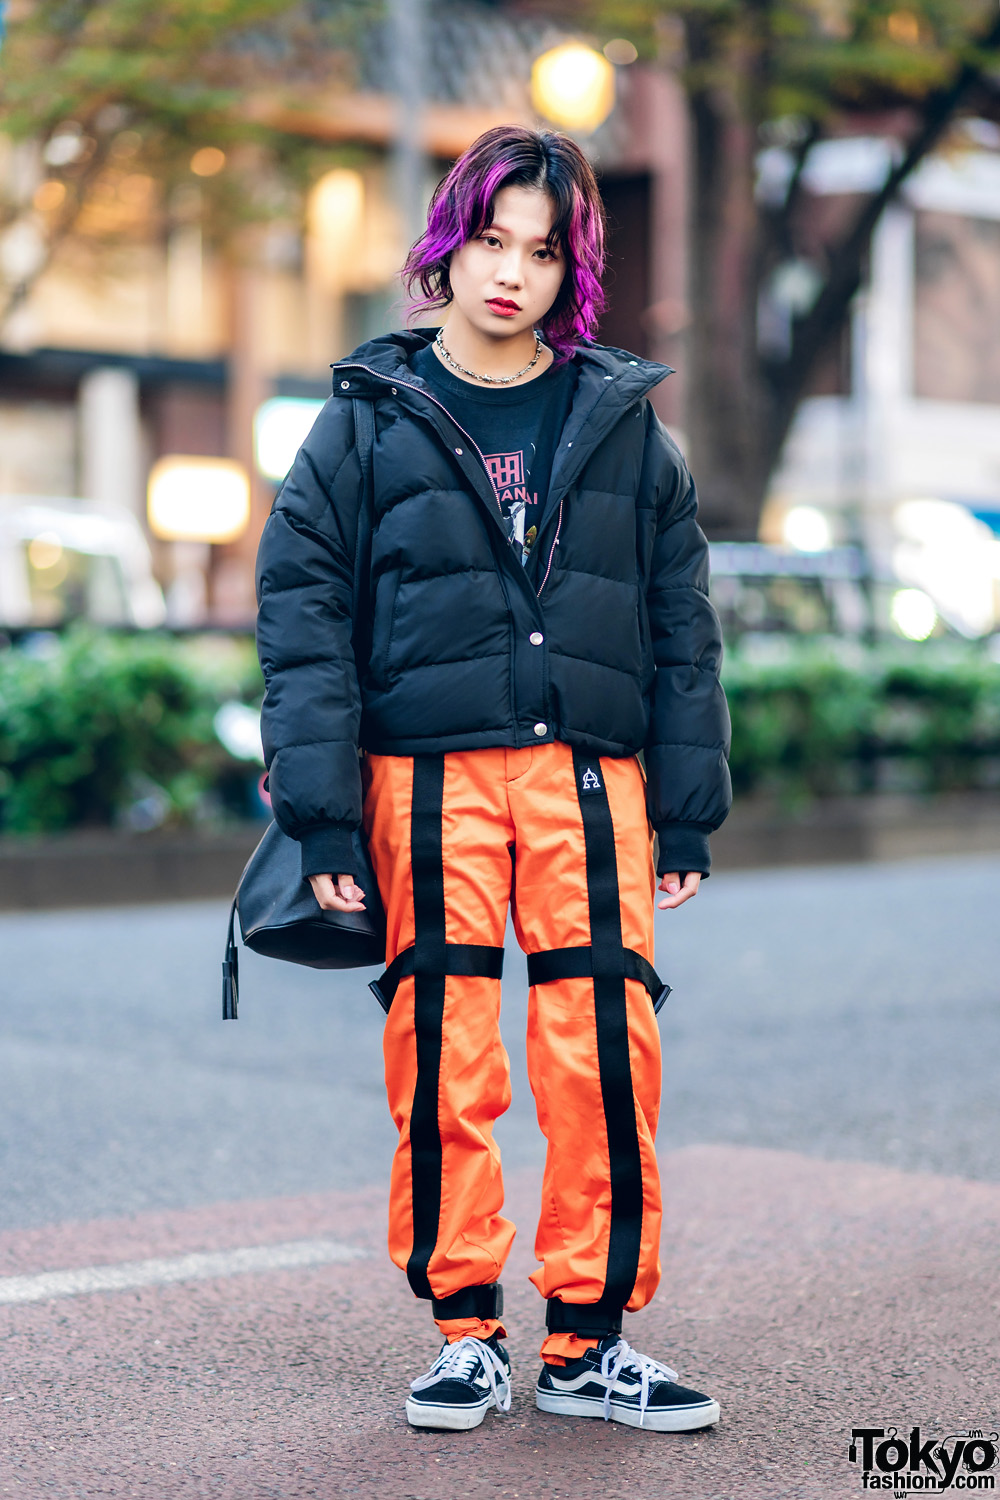 Tokyo Winter Street Style w/ Purple Hair, Jouetie Puffer Jacket, Orange Strap Pants, Barbed Wire Necklace, Bucket Bag & Vans Sneakers